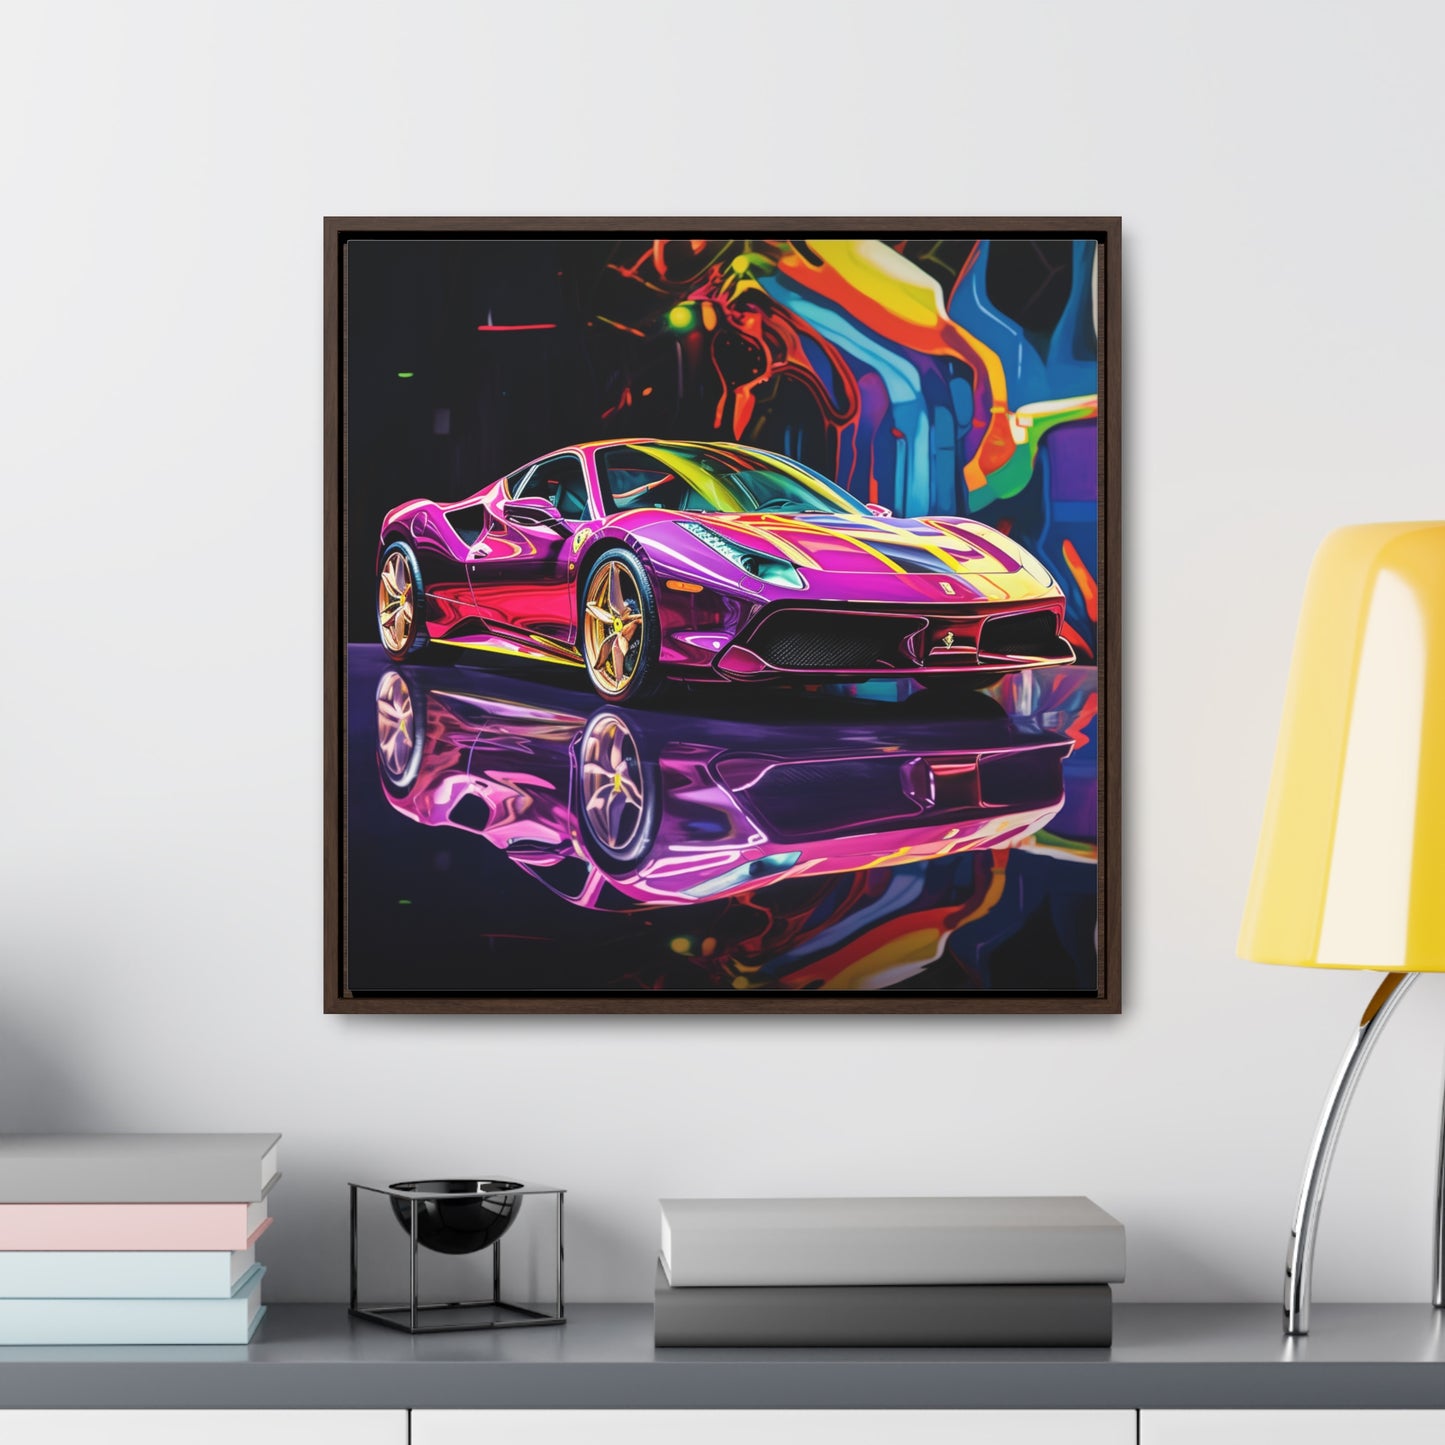 Gallery Canvas Wraps, Square Frame Pink Macro Ferrari 2